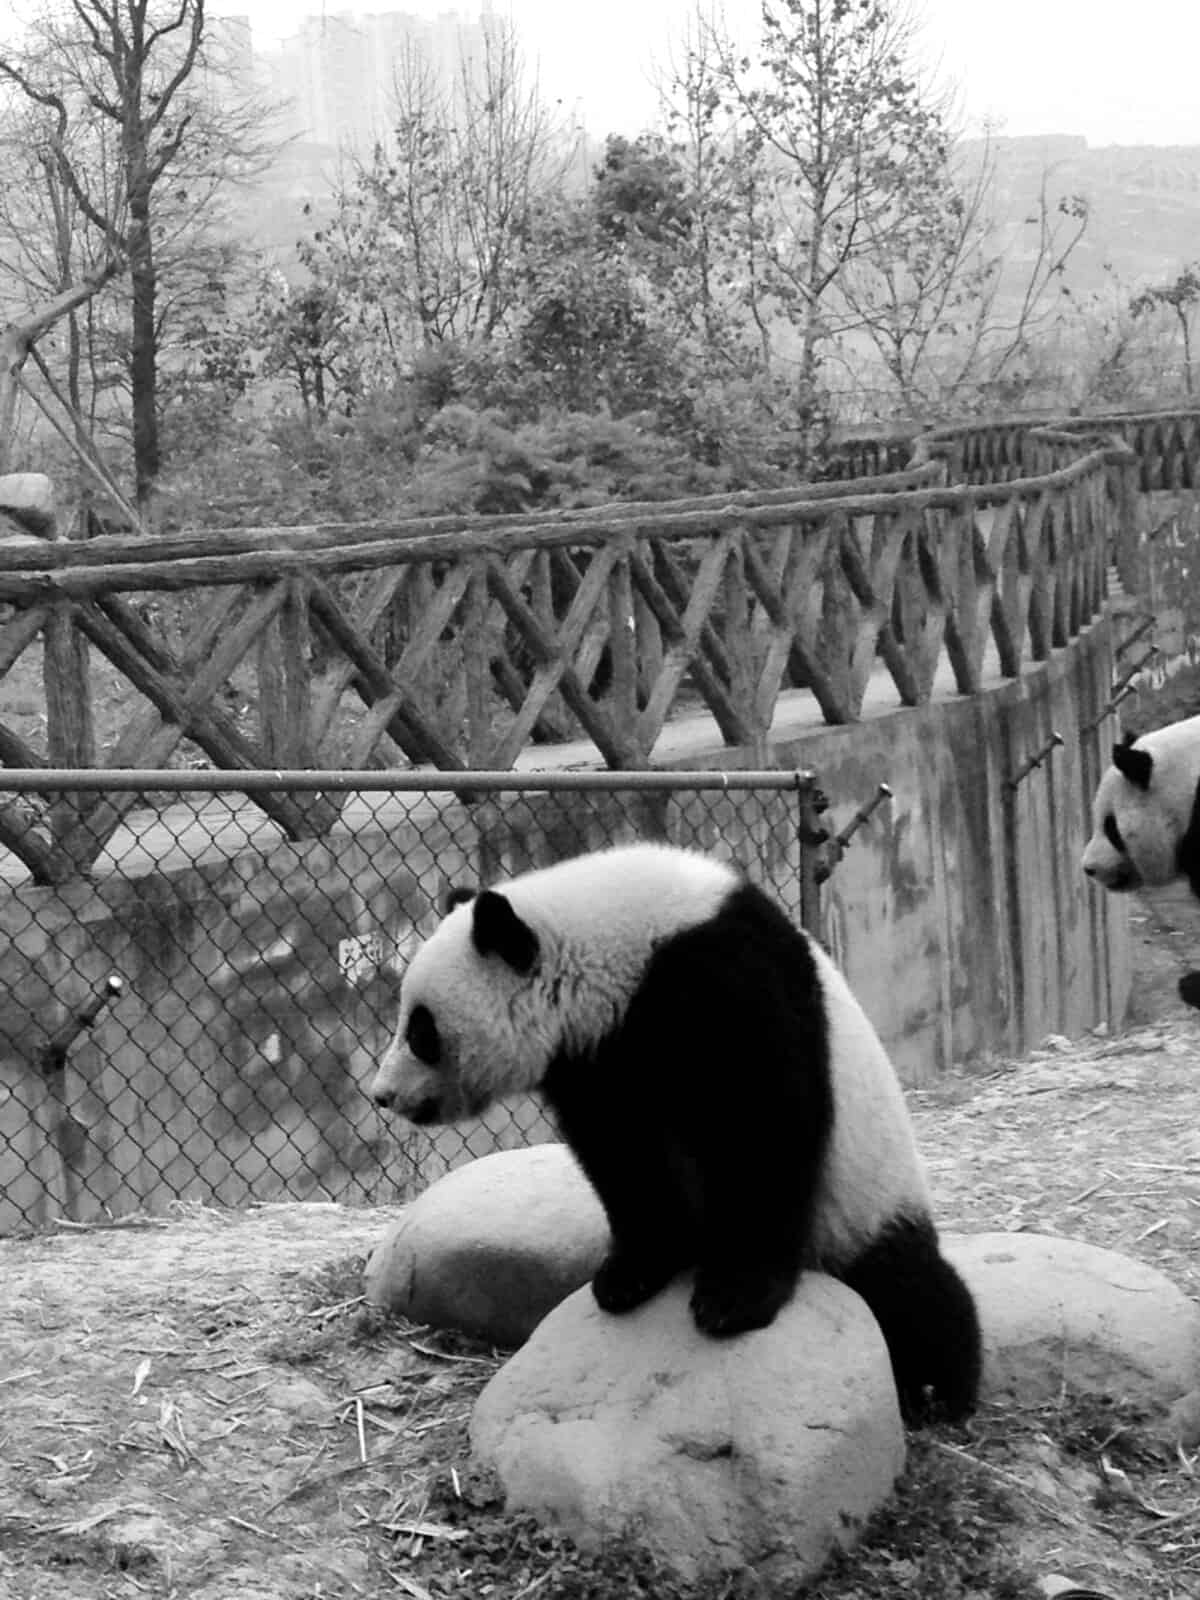 A live giant panda in Chengdu, China.